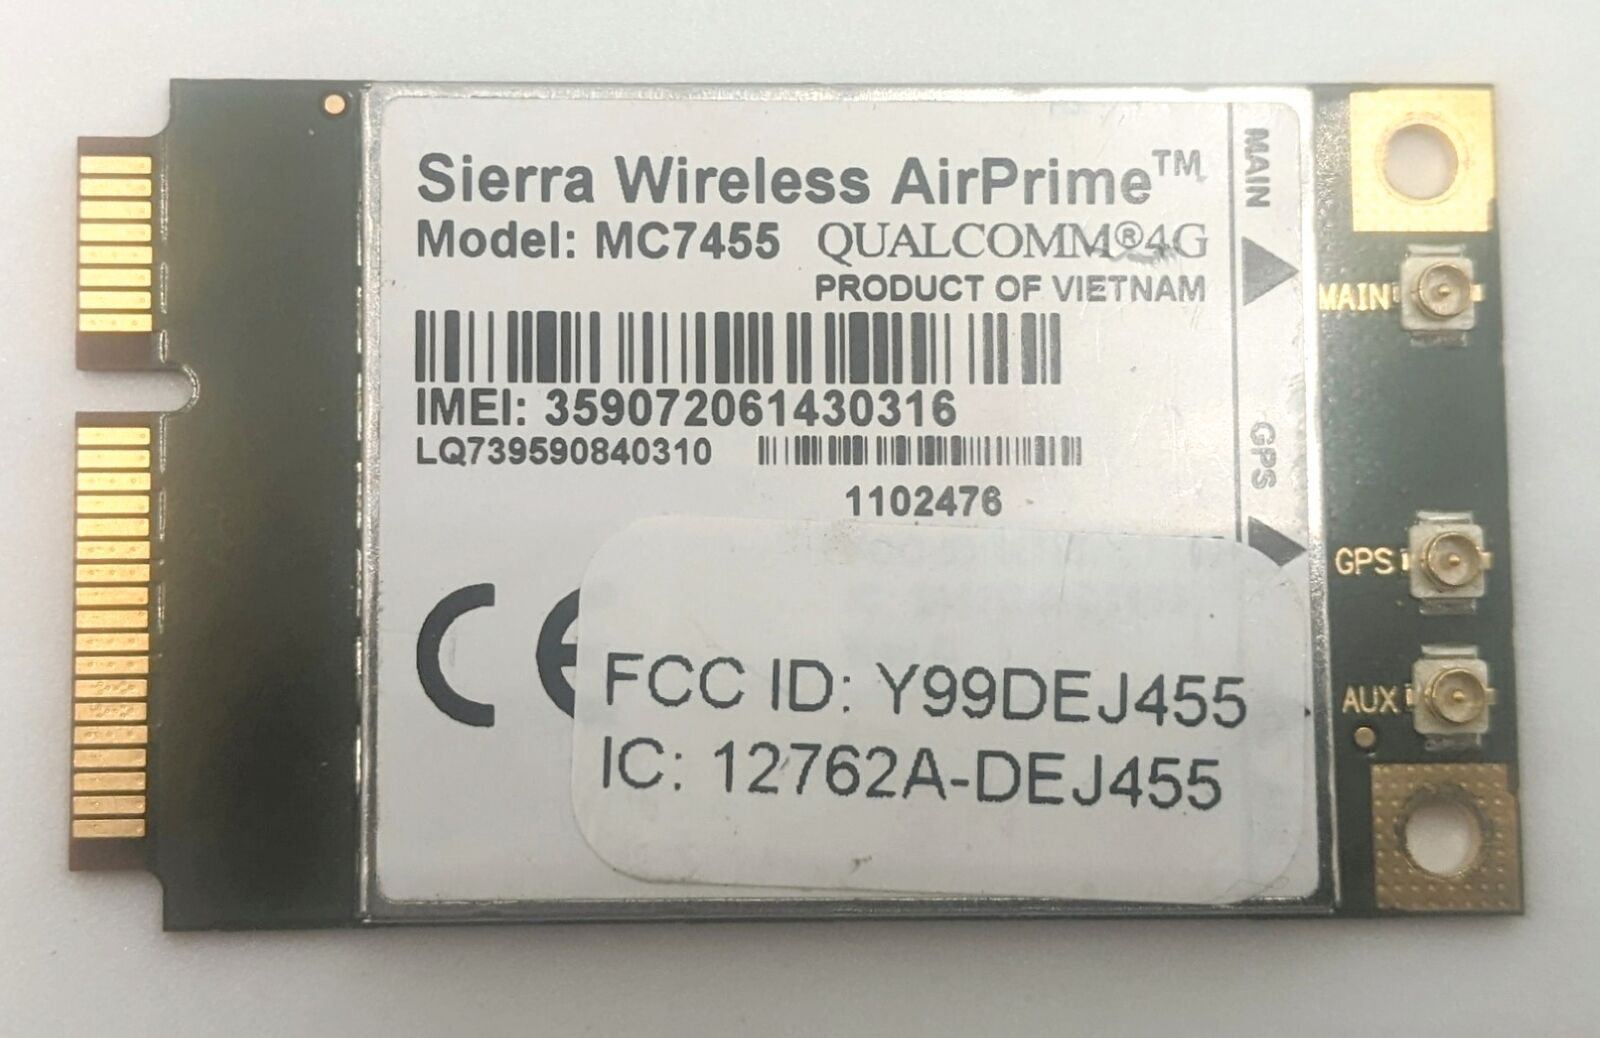 Sierra Wireless AirPrime MC7455 1102476 4G LTE Wireless Cellular Modem